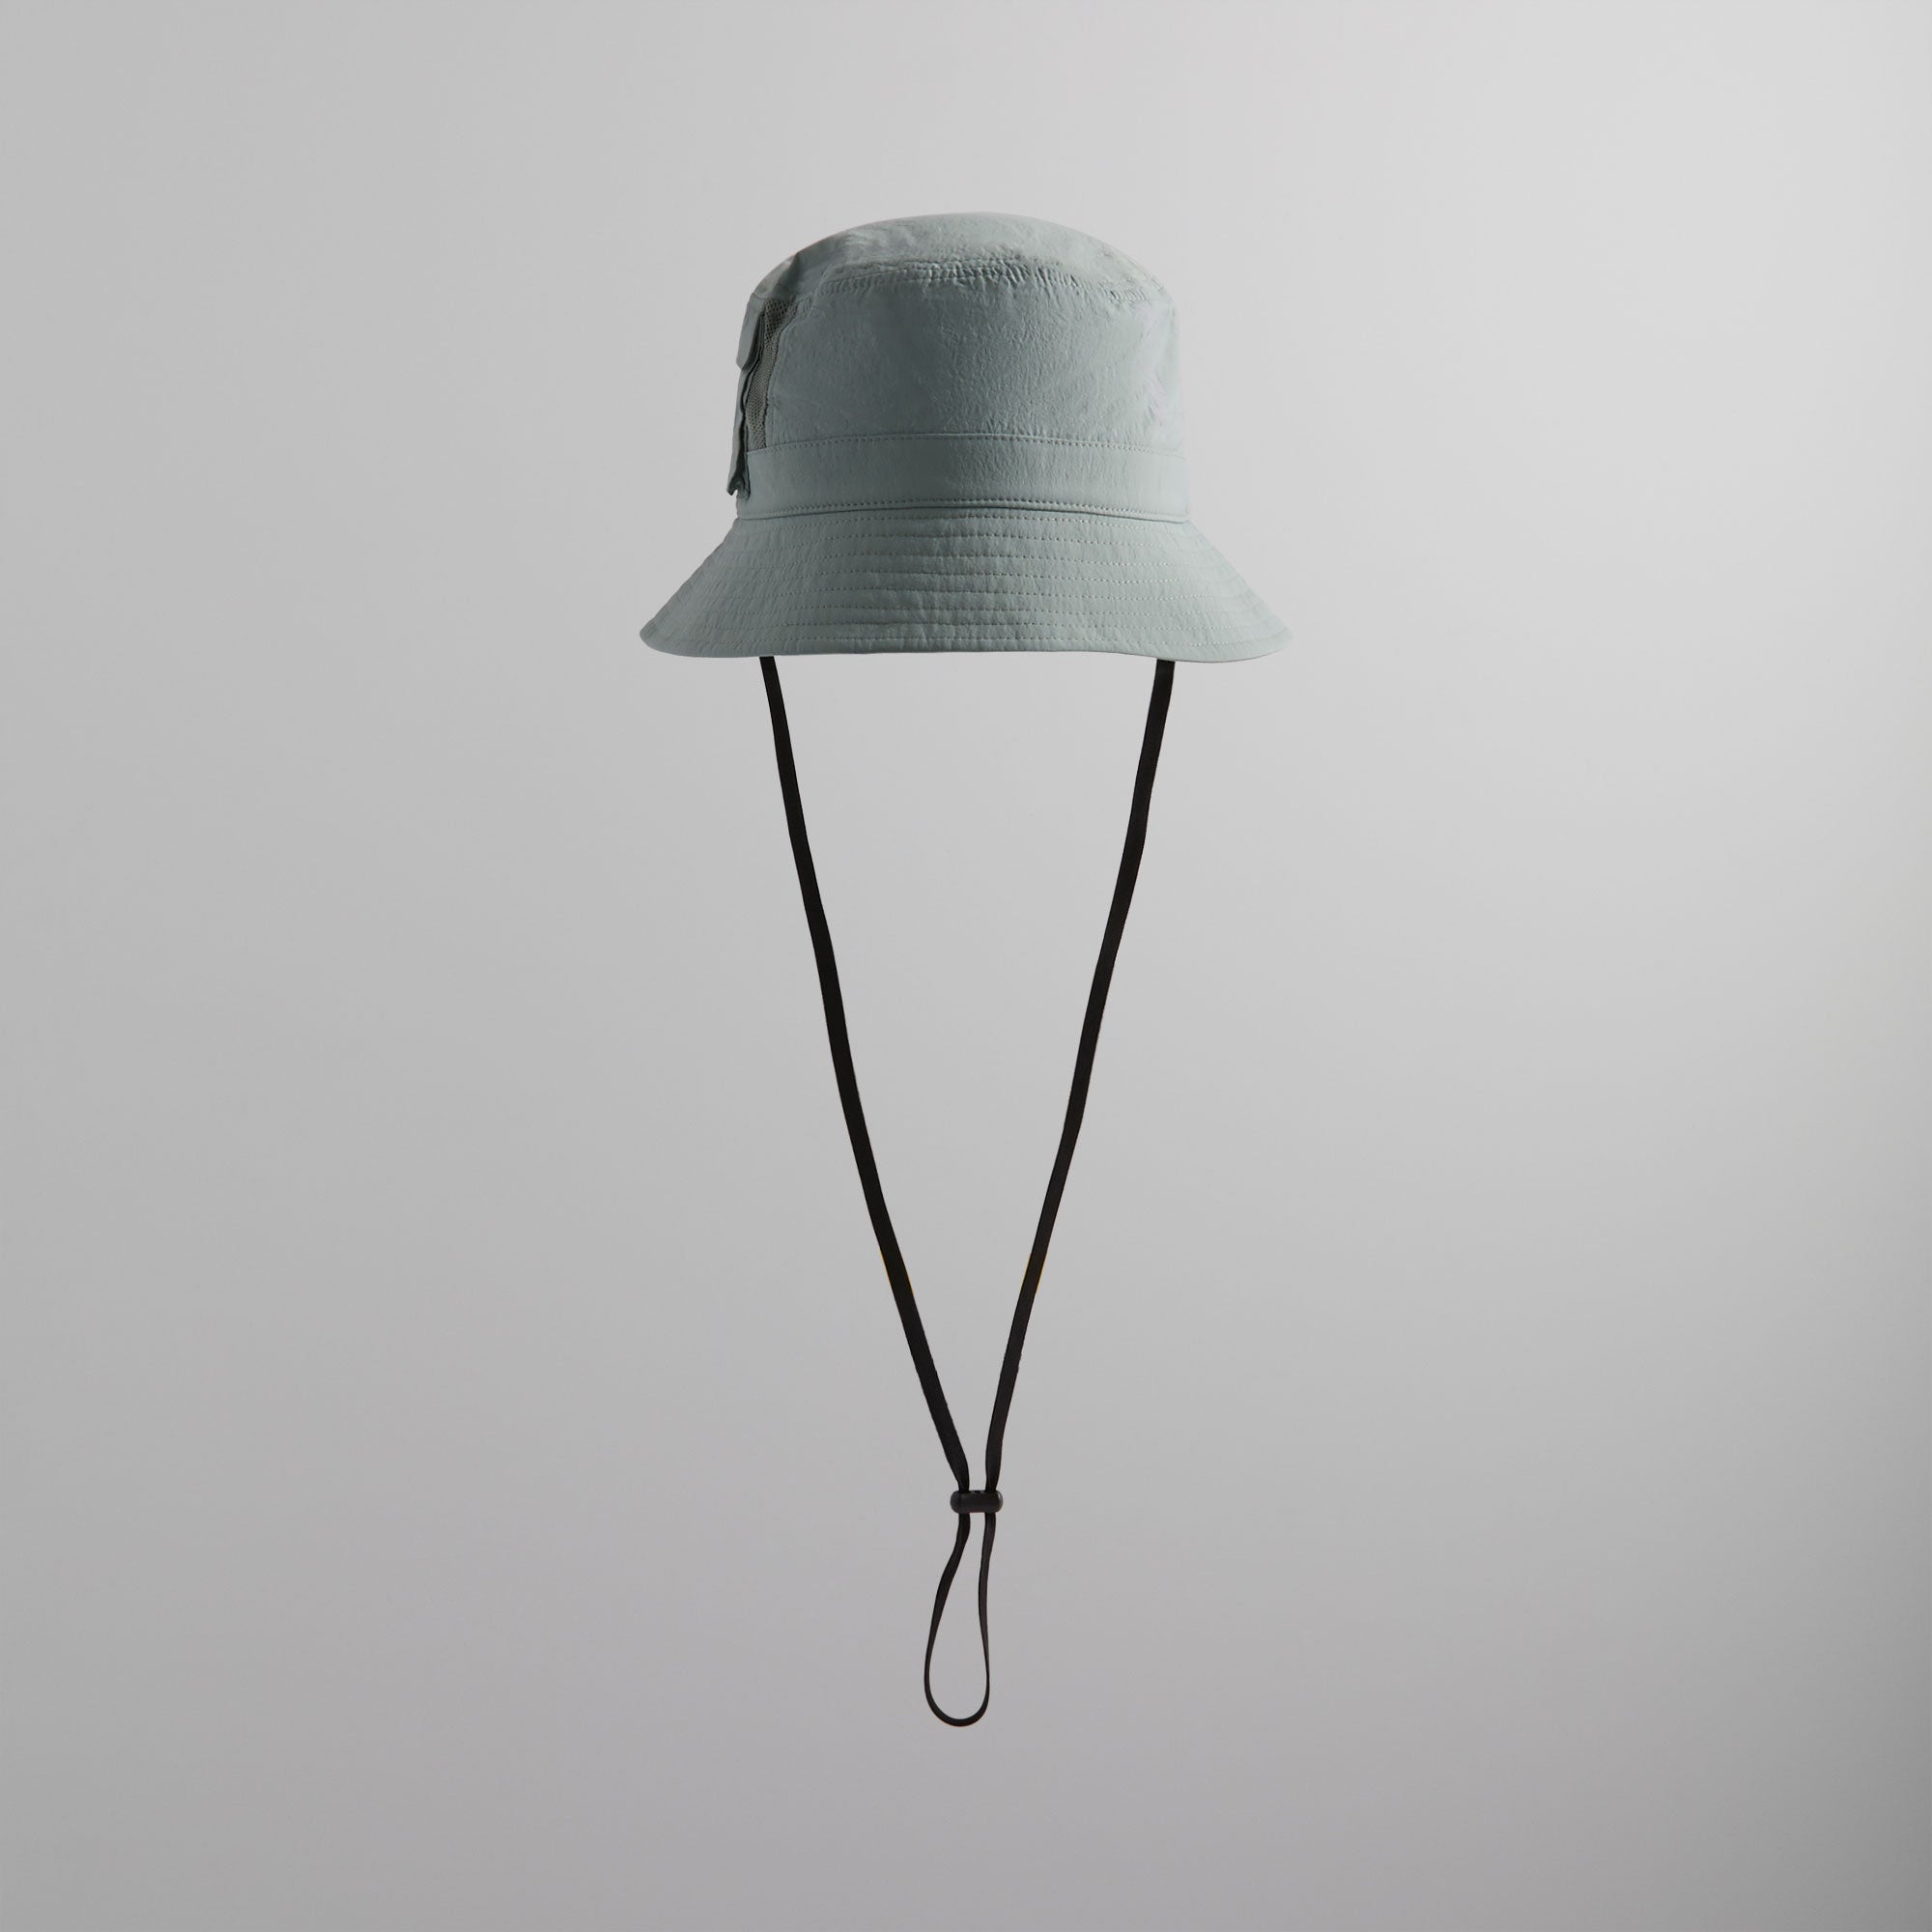 KITH × NEEDLES Bermuda Bucket Cap Msize - ファッション